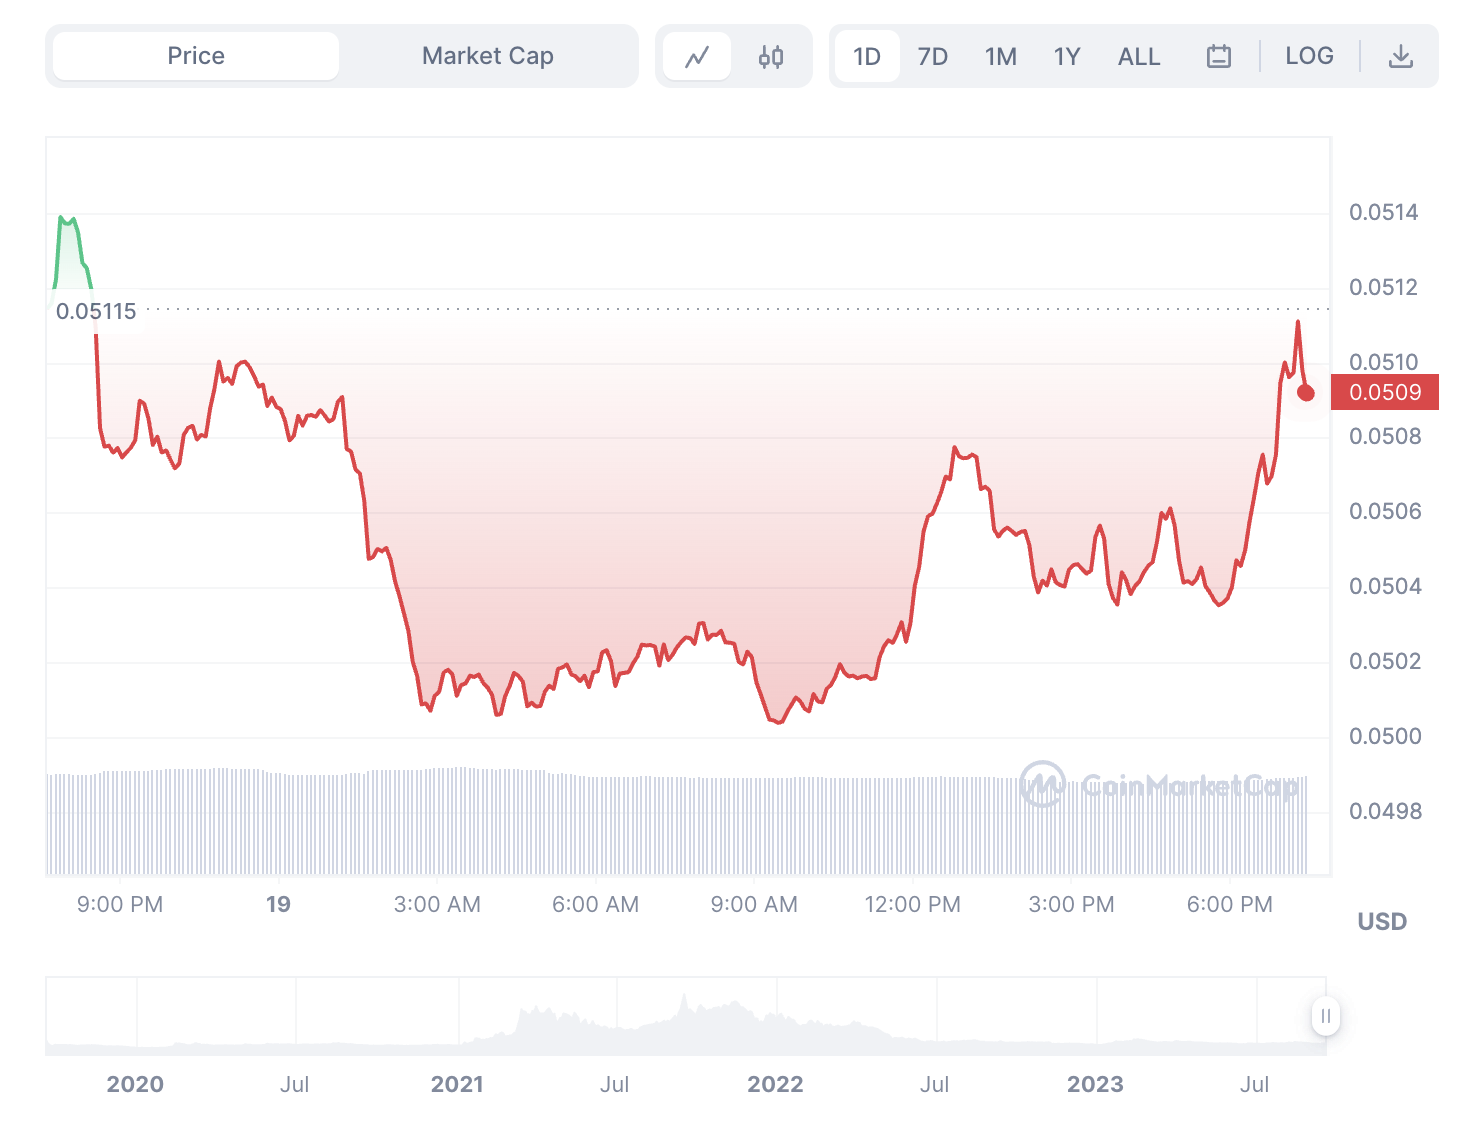 HBAR 1-day price chart. Source: CoinMarketCap